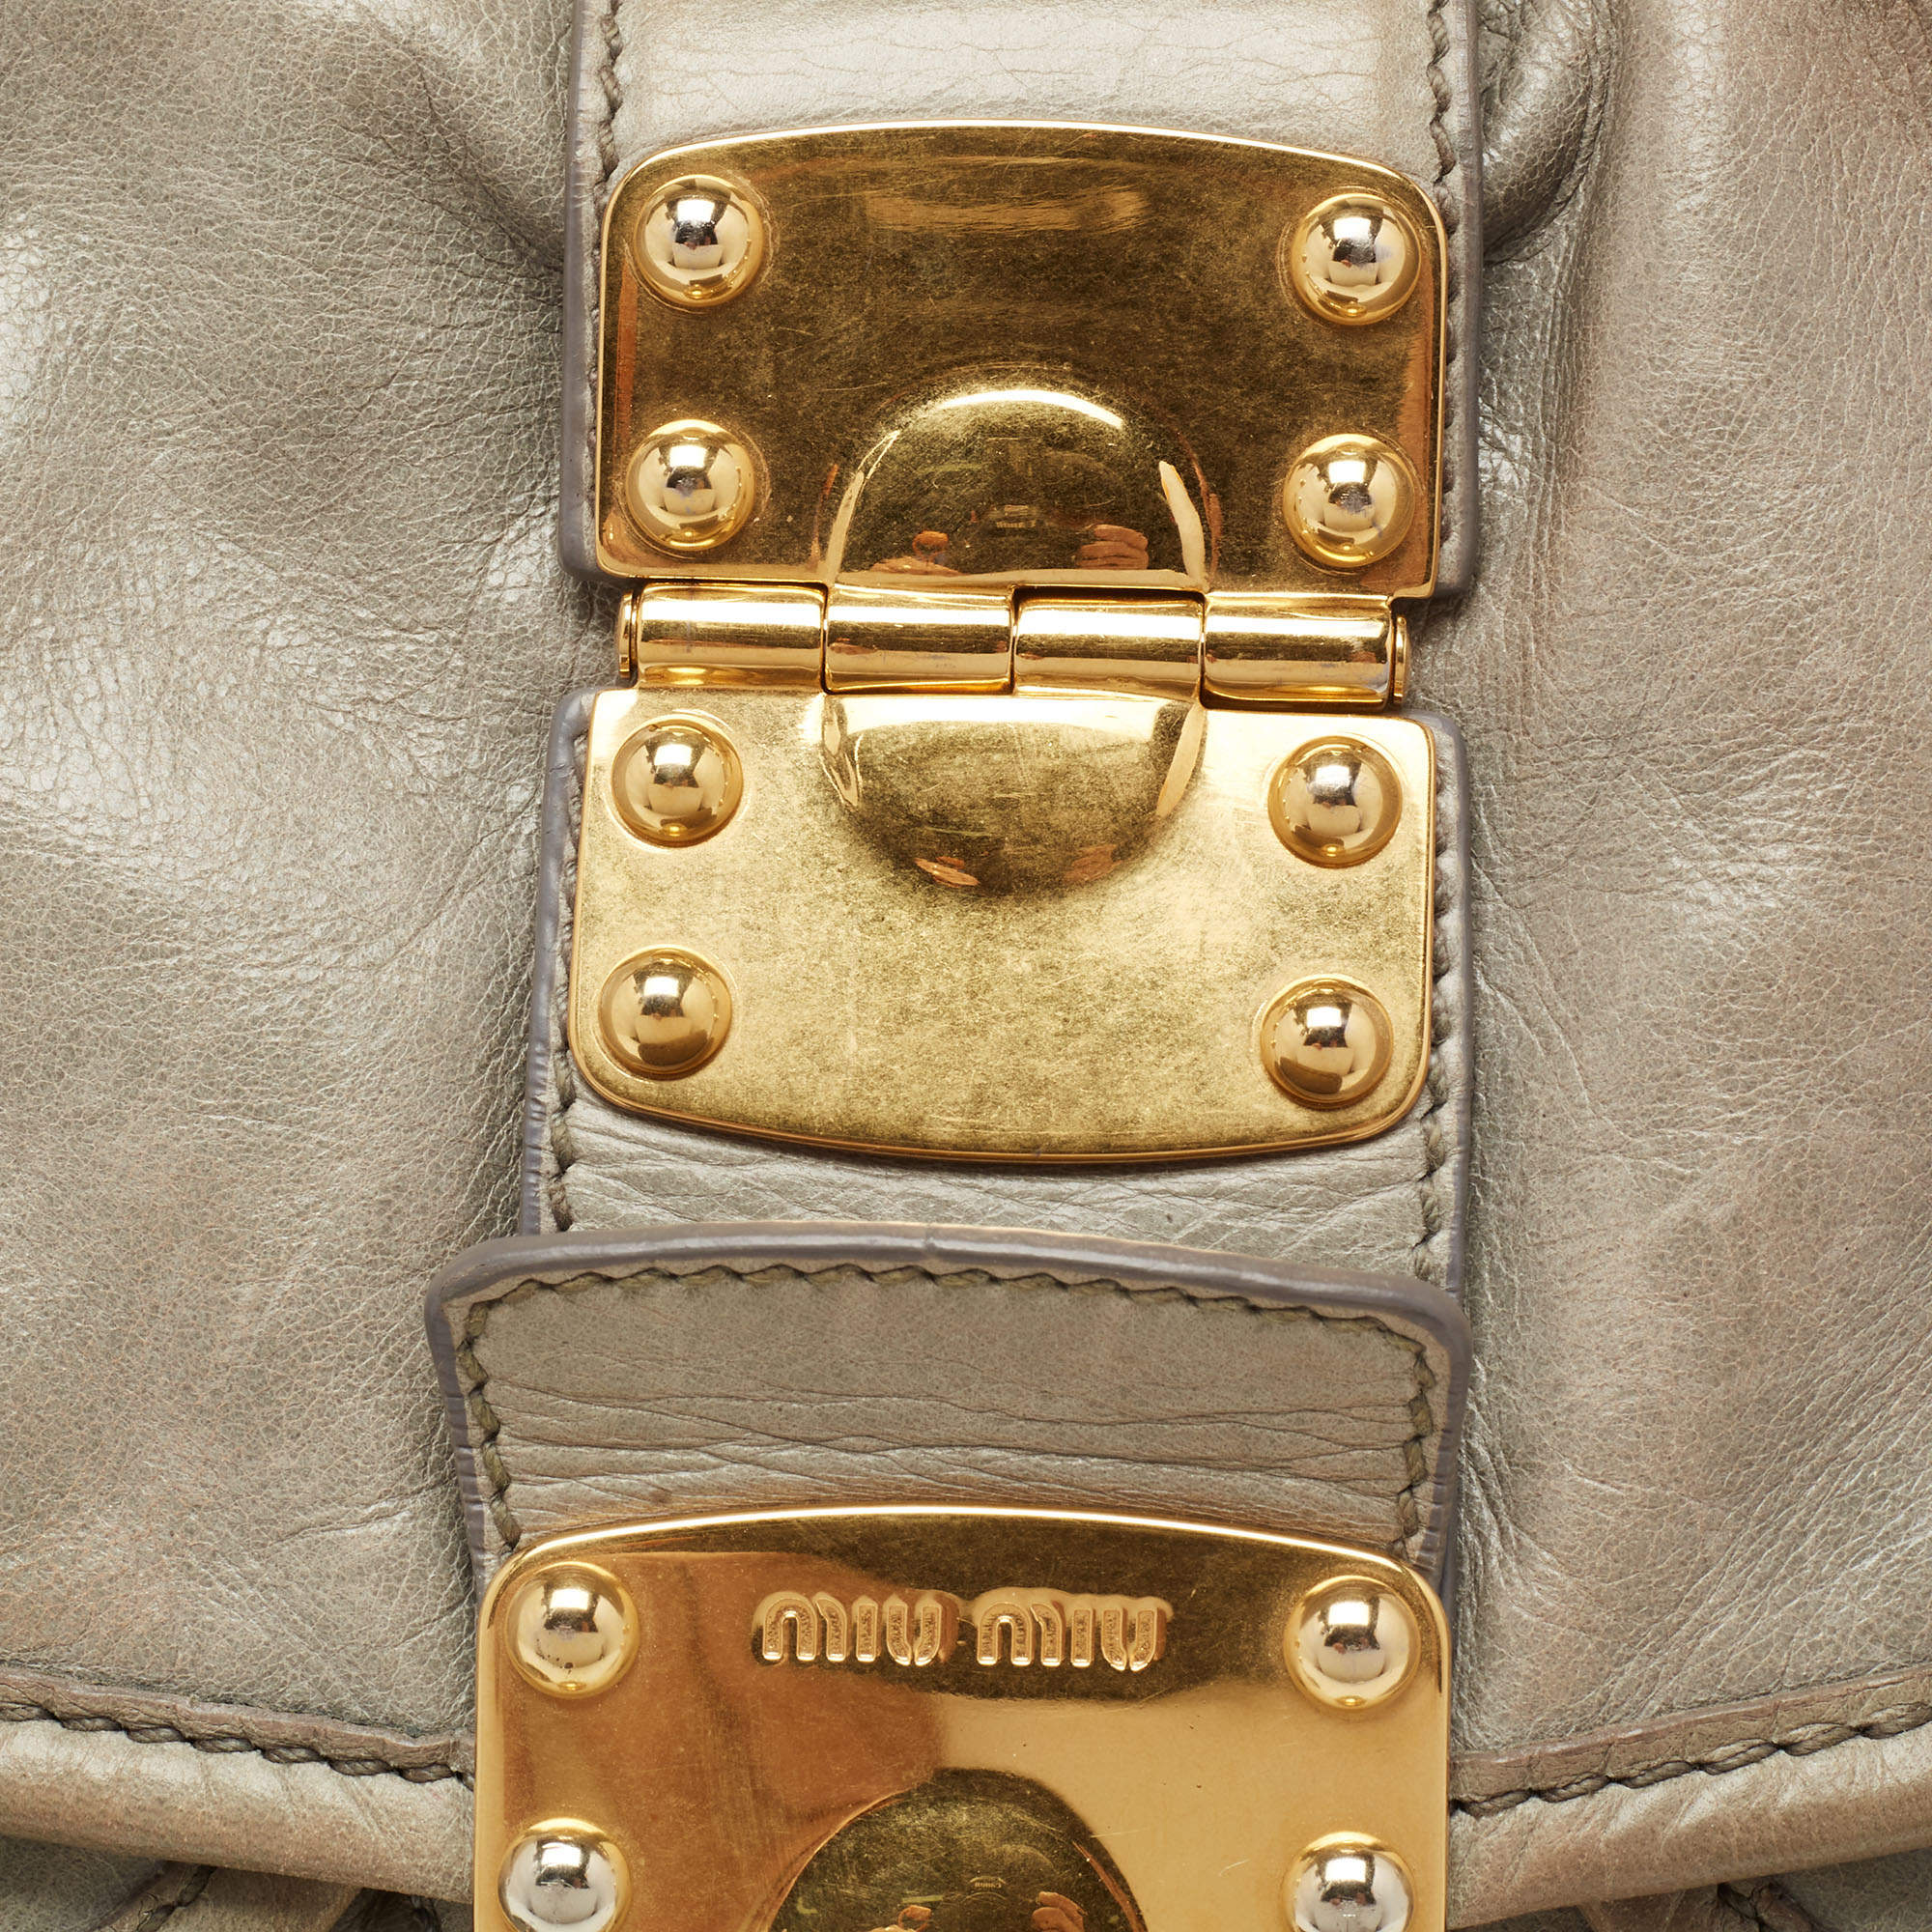 Coffer leather handbag Miu Miu Beige in Leather - 32854839